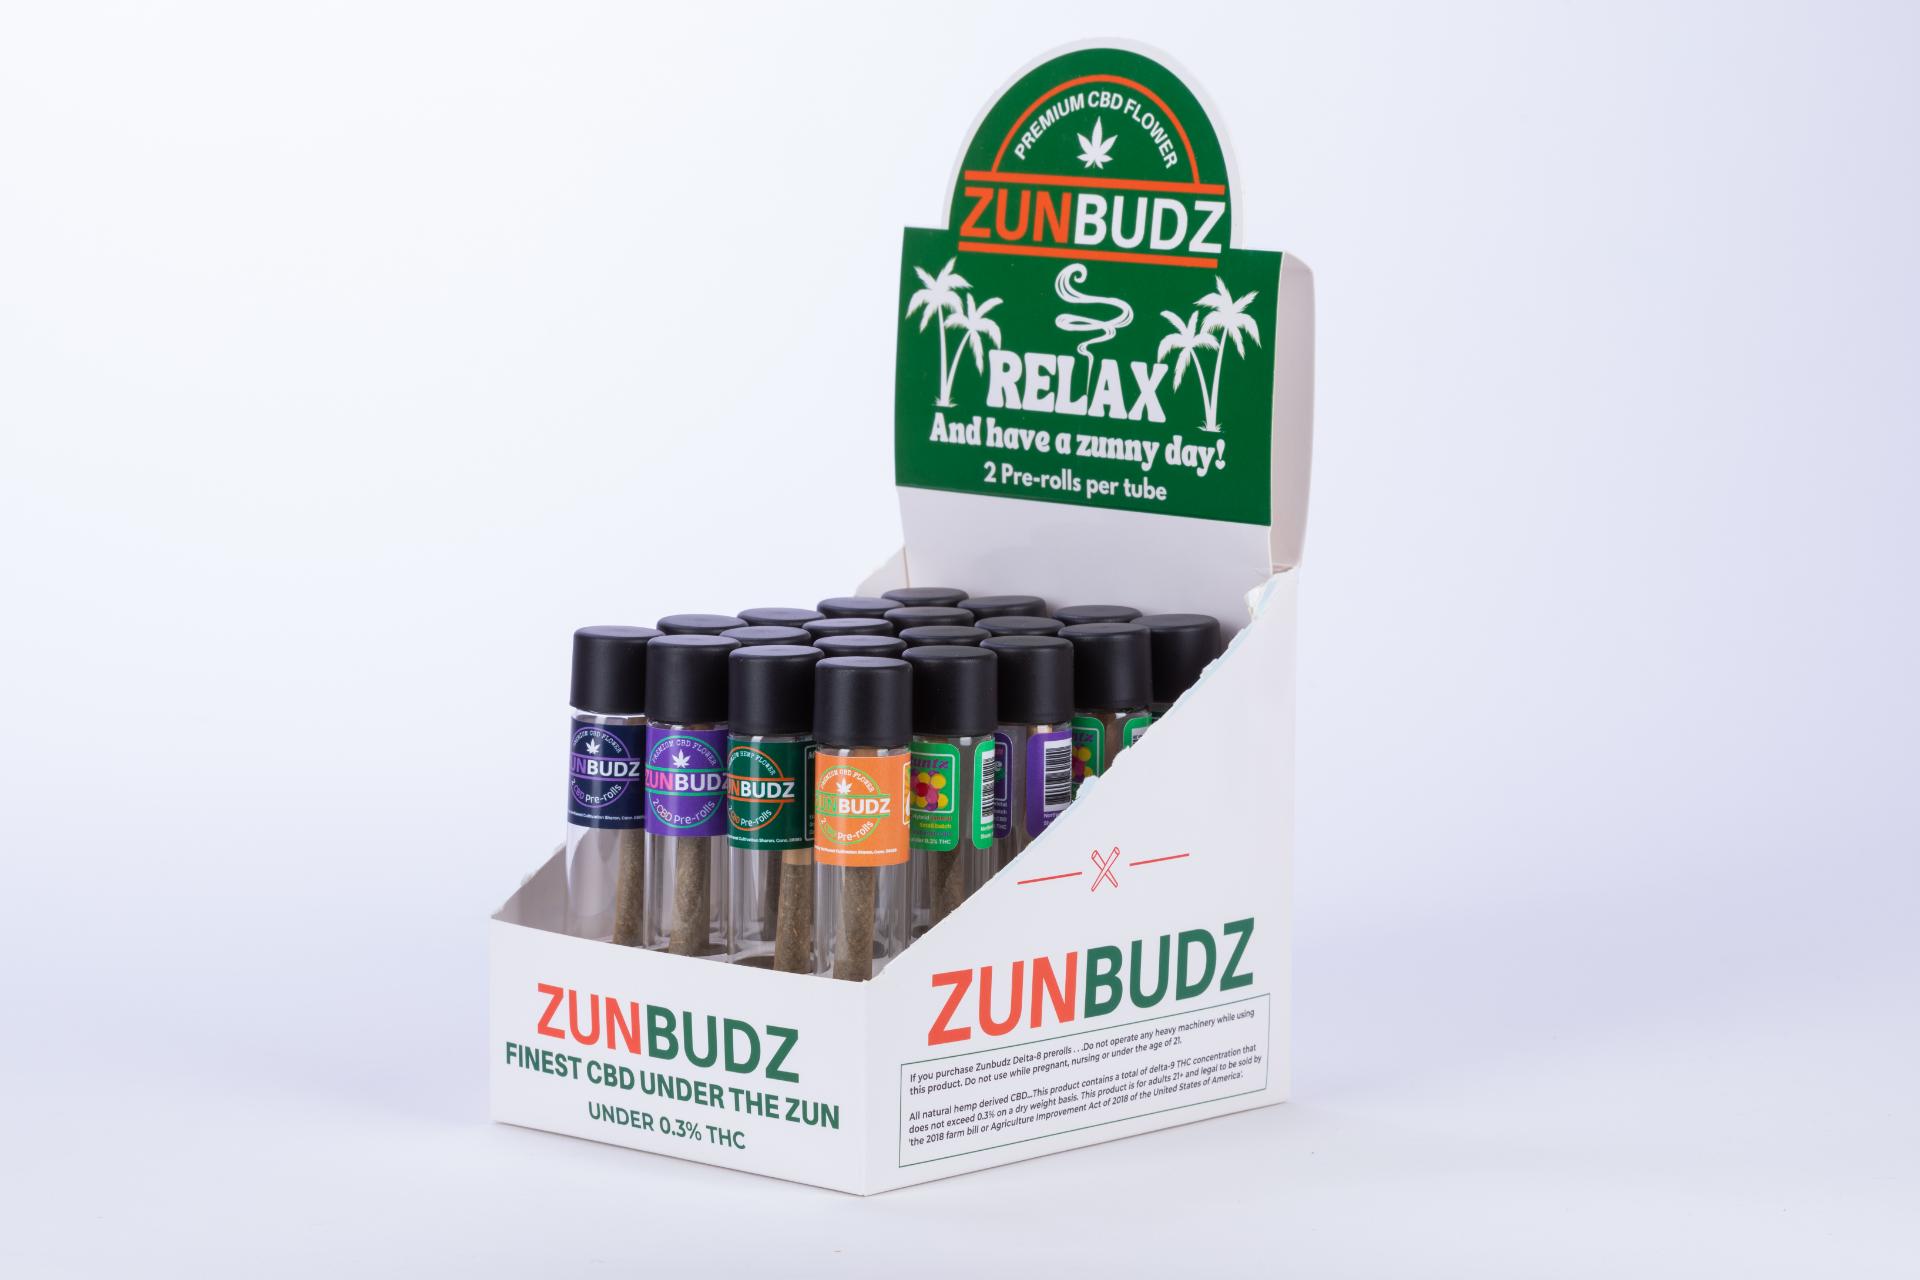 ZunBudz wholesale mixed pre roll box 20 piece 2 pre rolls in each